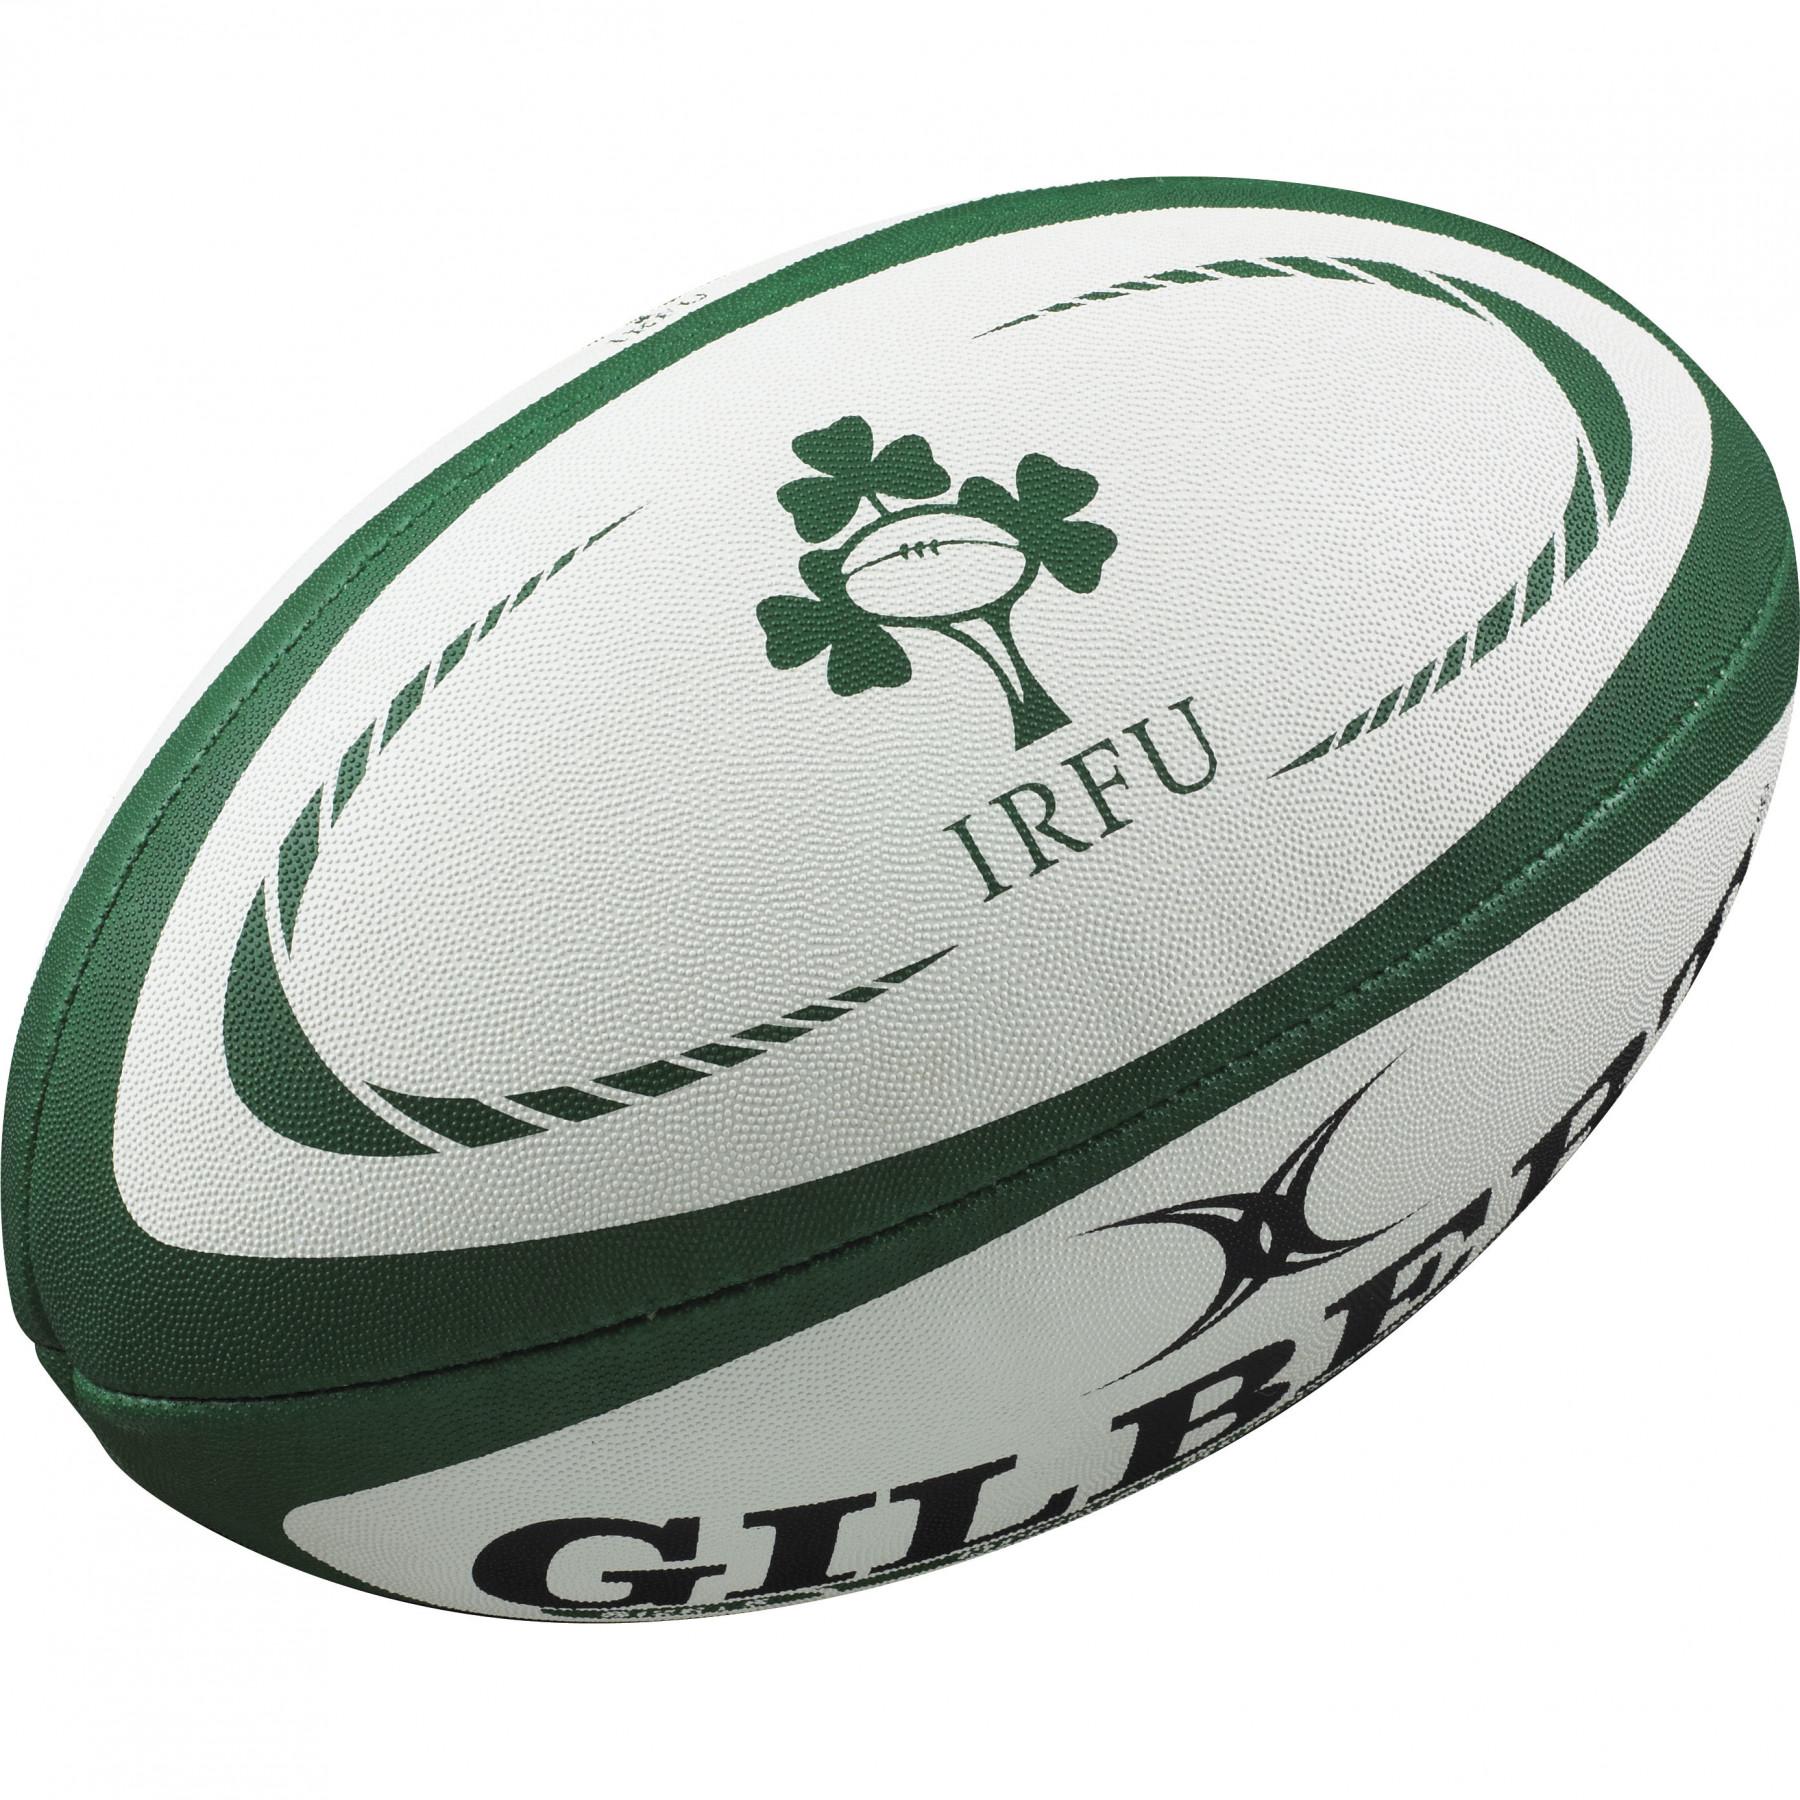 Rugby ball mini replica Gilbert Irlande (size 1)